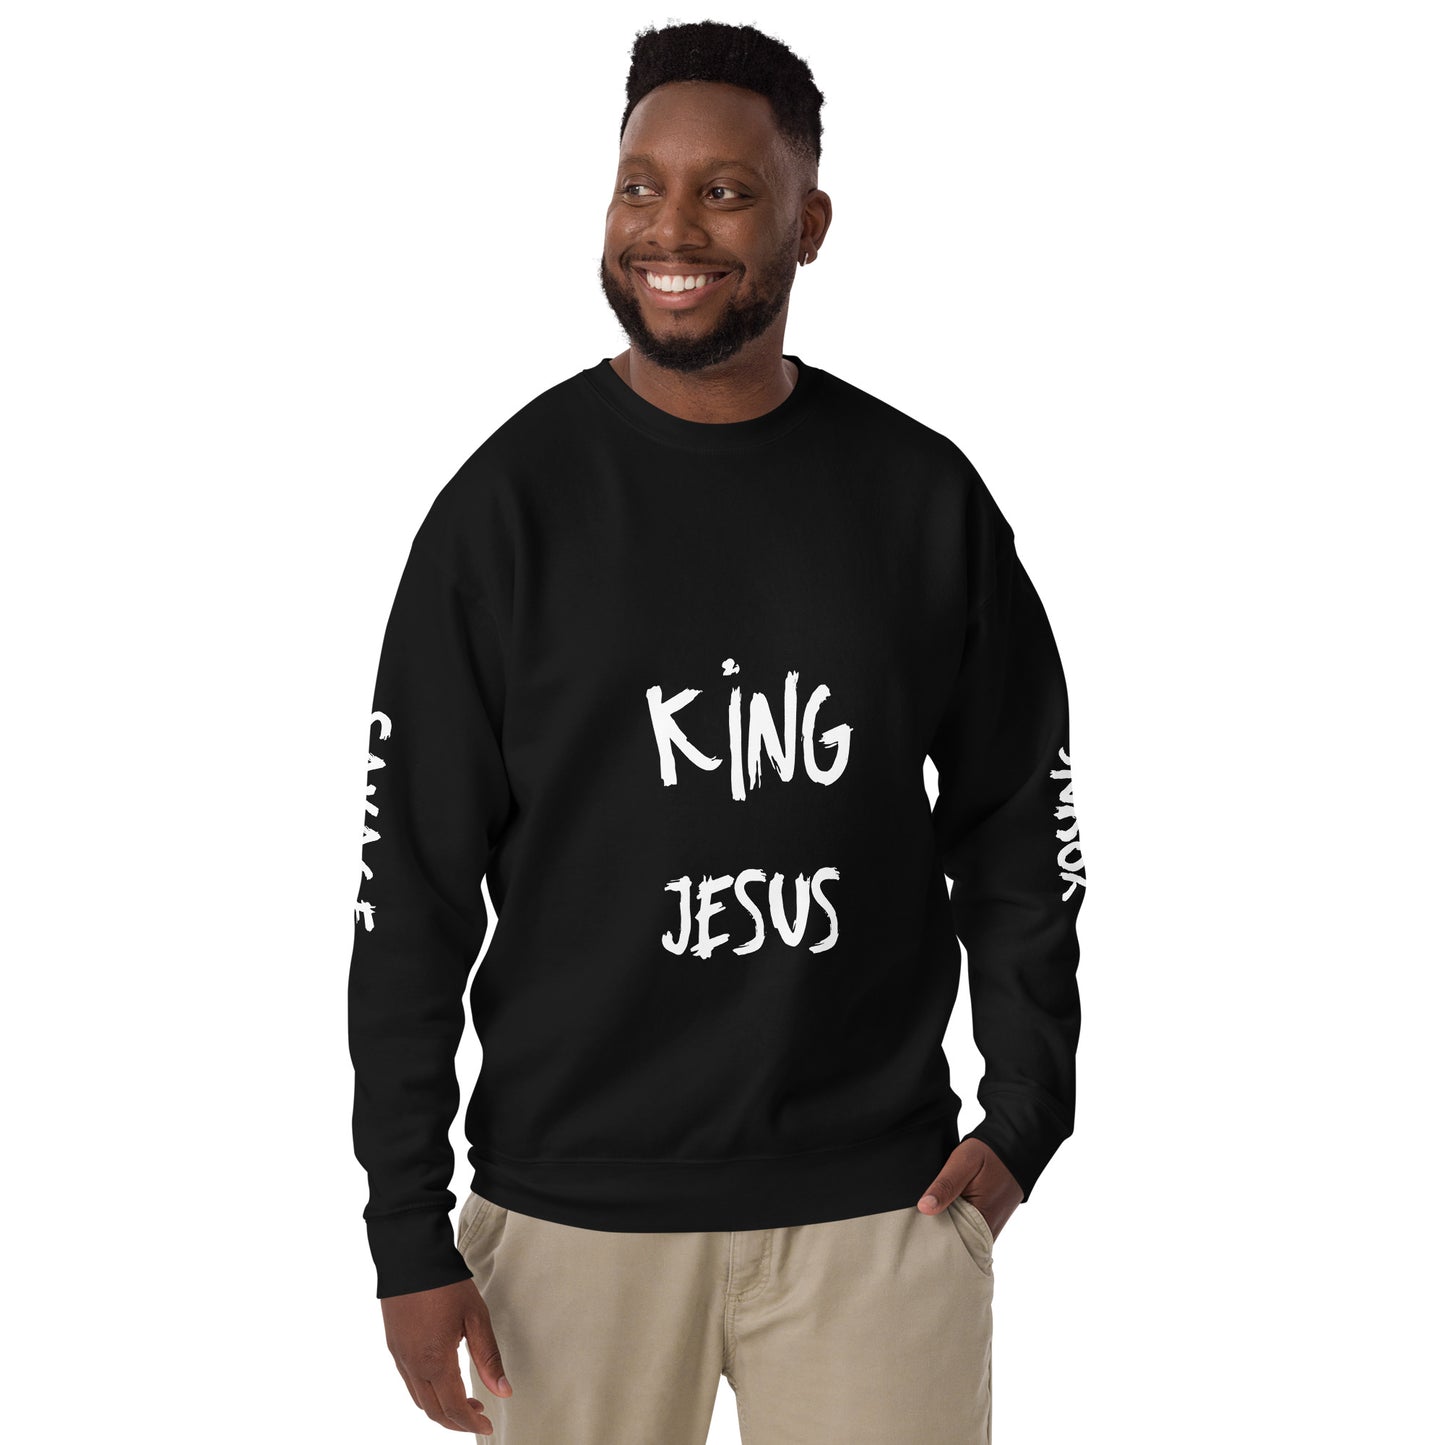 King Jesus - Unisex Premium Sweatshirt